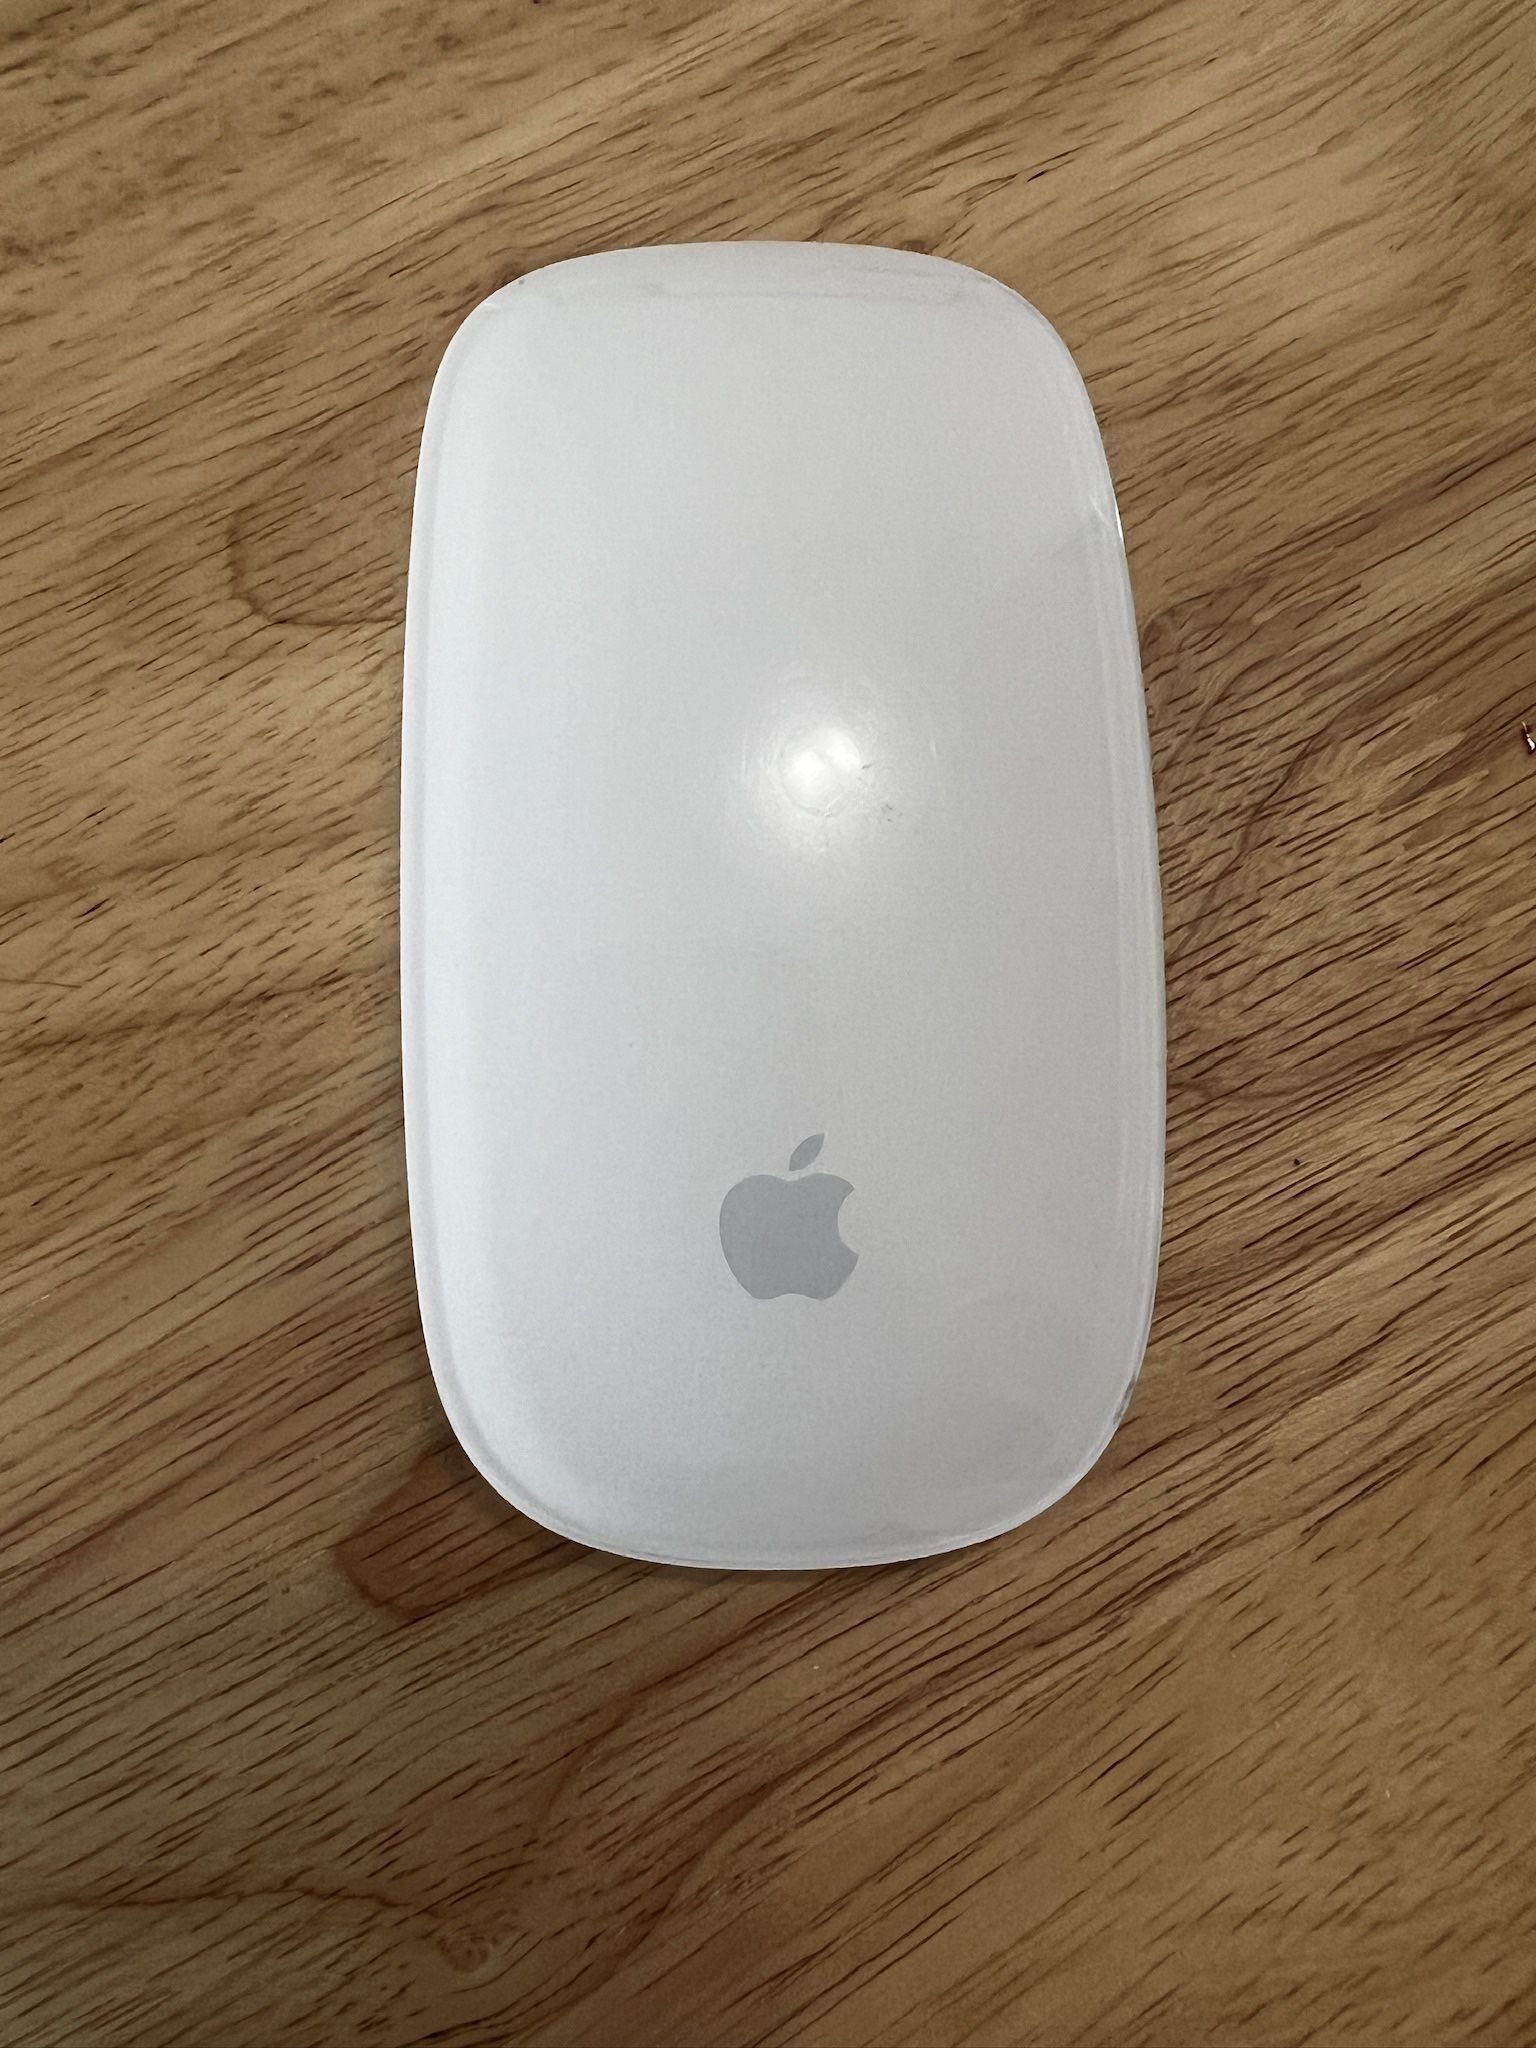 Apple Magic Mouse - White Bluetooth